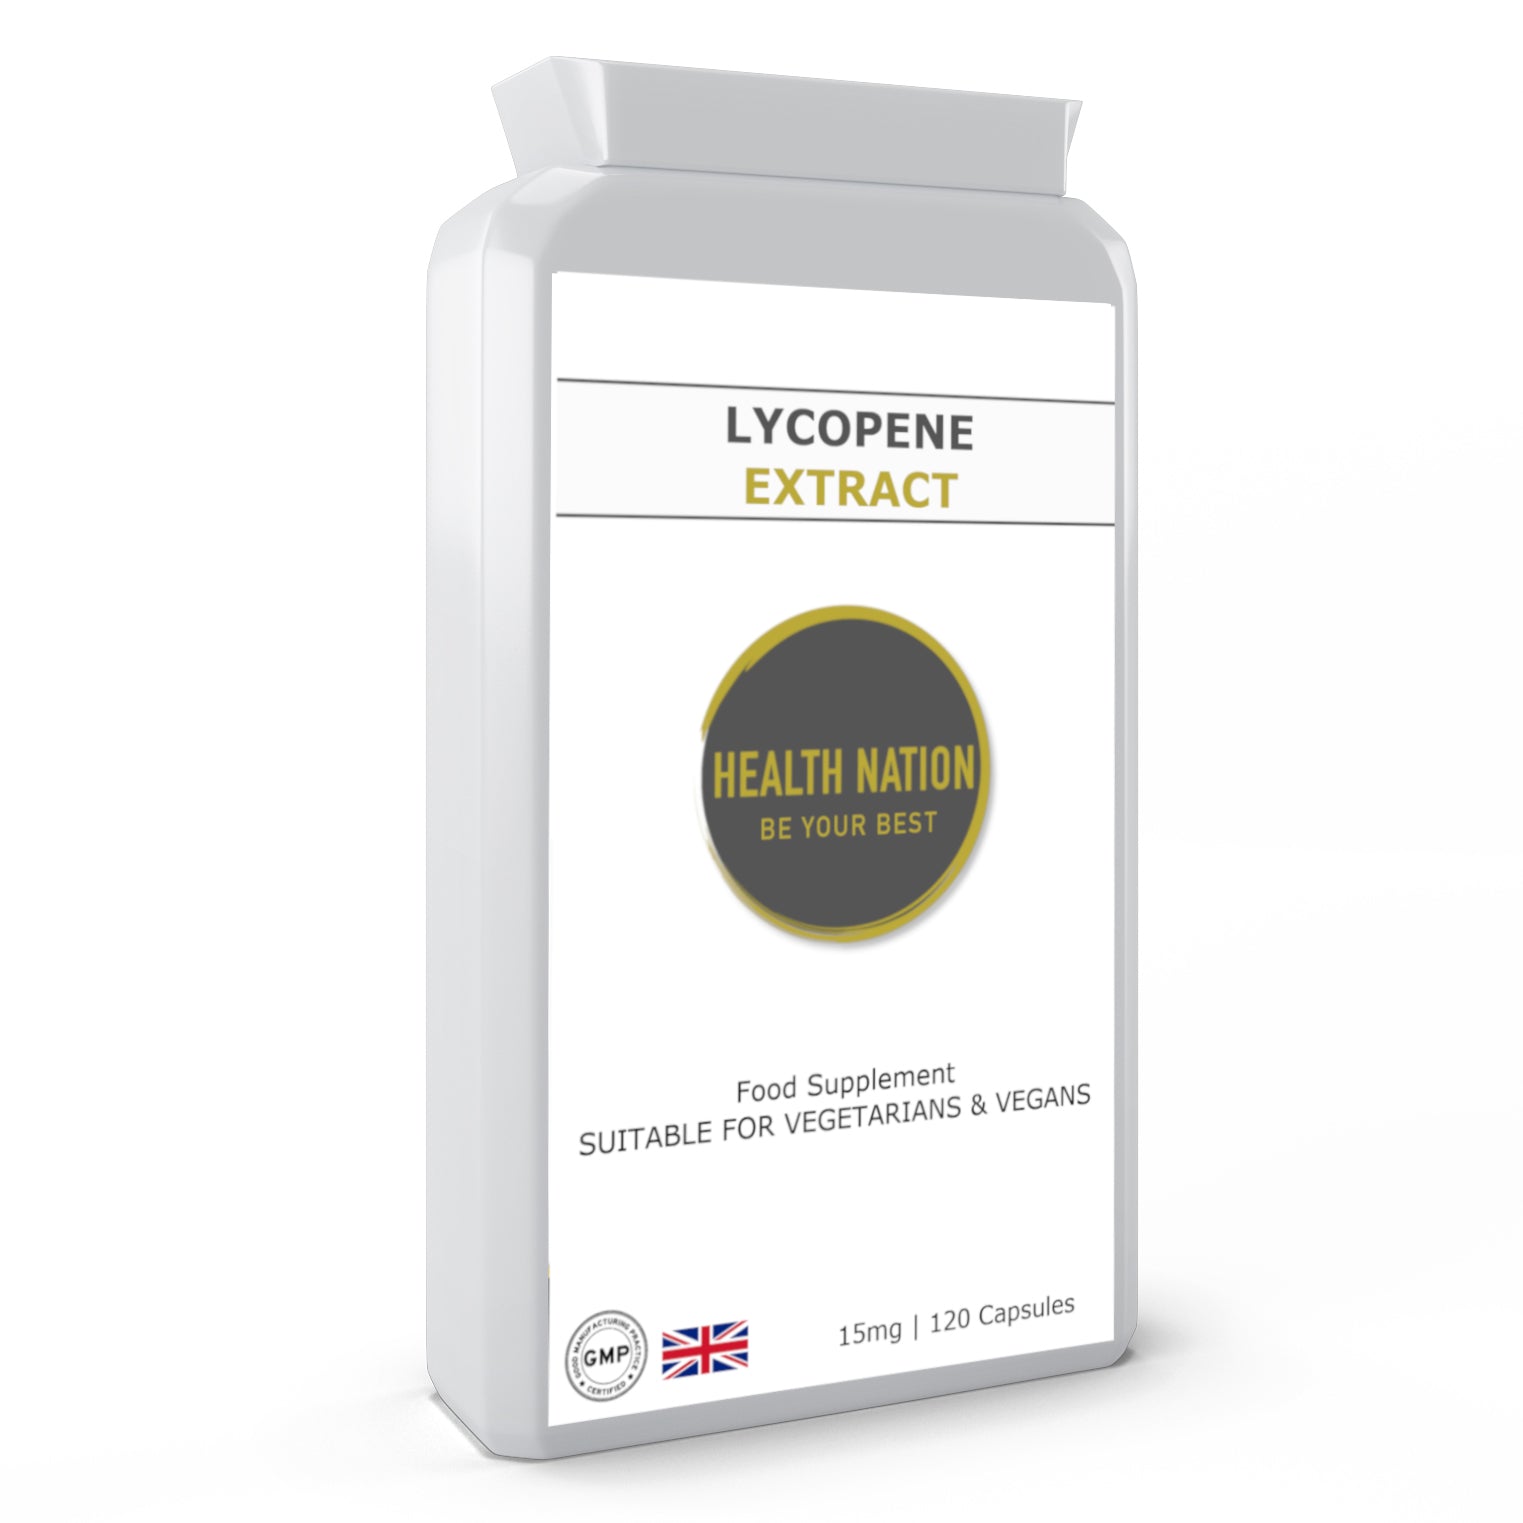 Lycopene | Helps with Eyesight, Bone Health and Detox | Made in UK | 15mg 120 Capsules - Health Nation